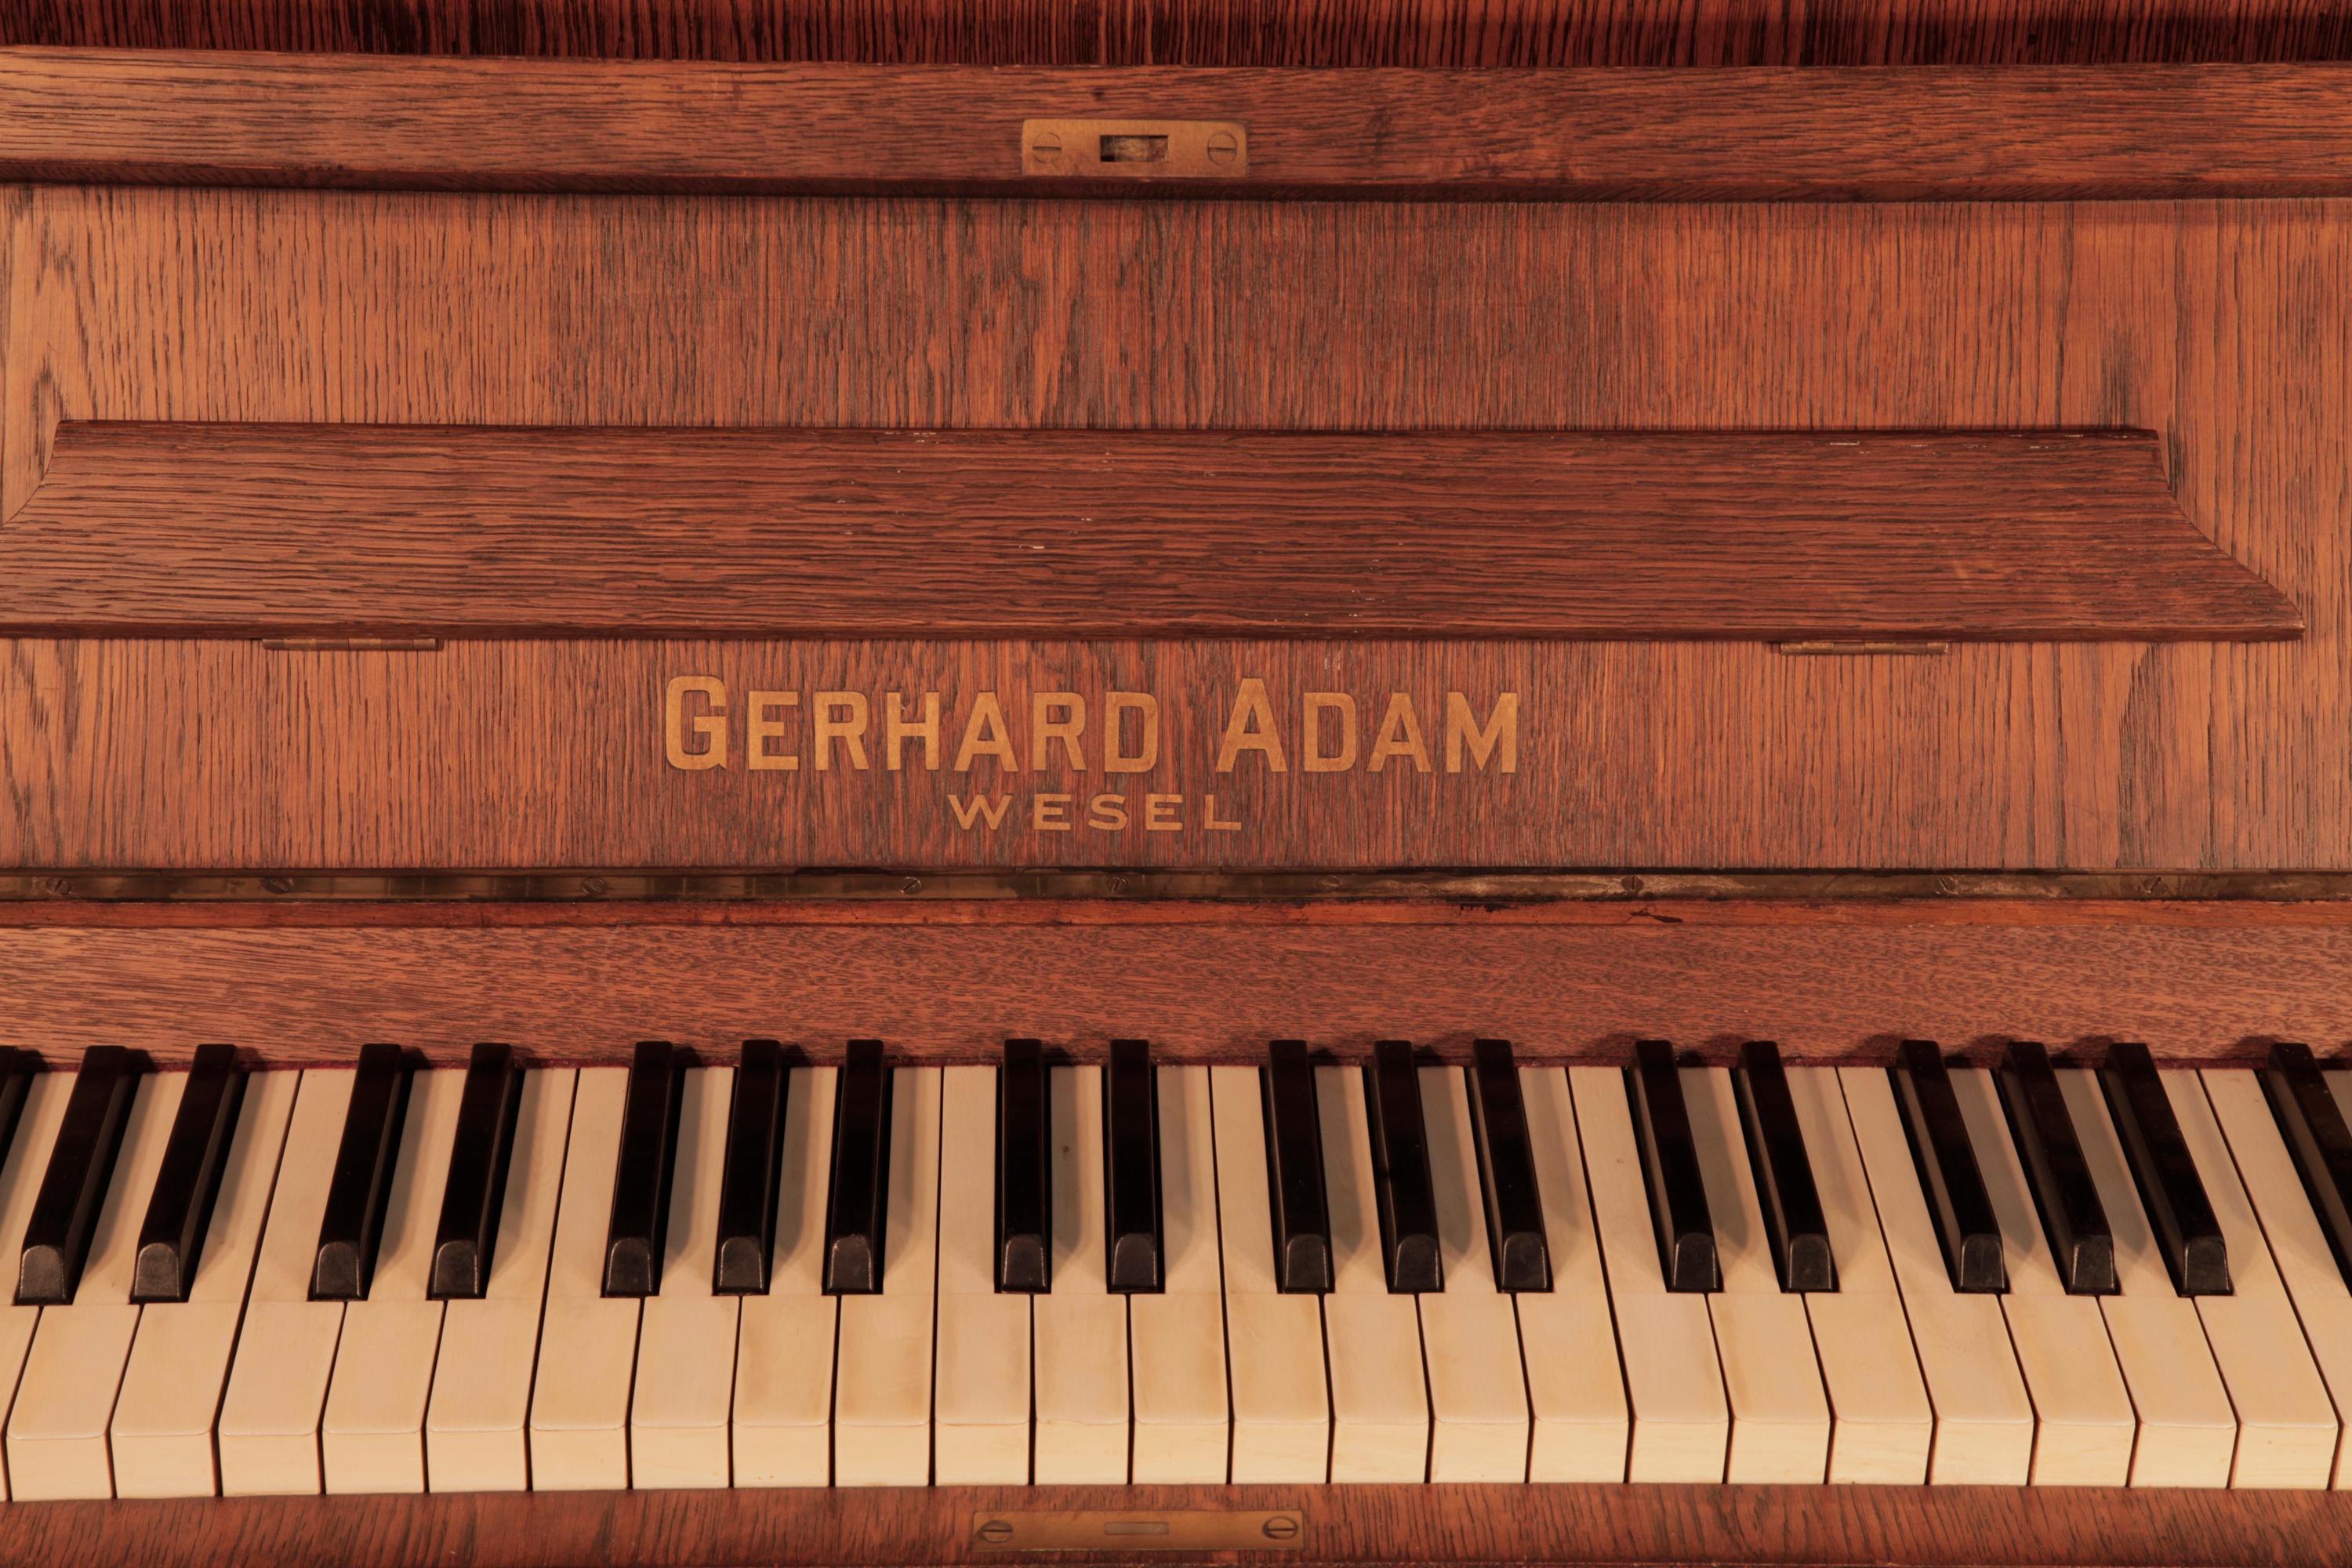 German Gerhard Adams Upright Piano Oak Brutalist Style Aggressive Lines Modular Planes For Sale